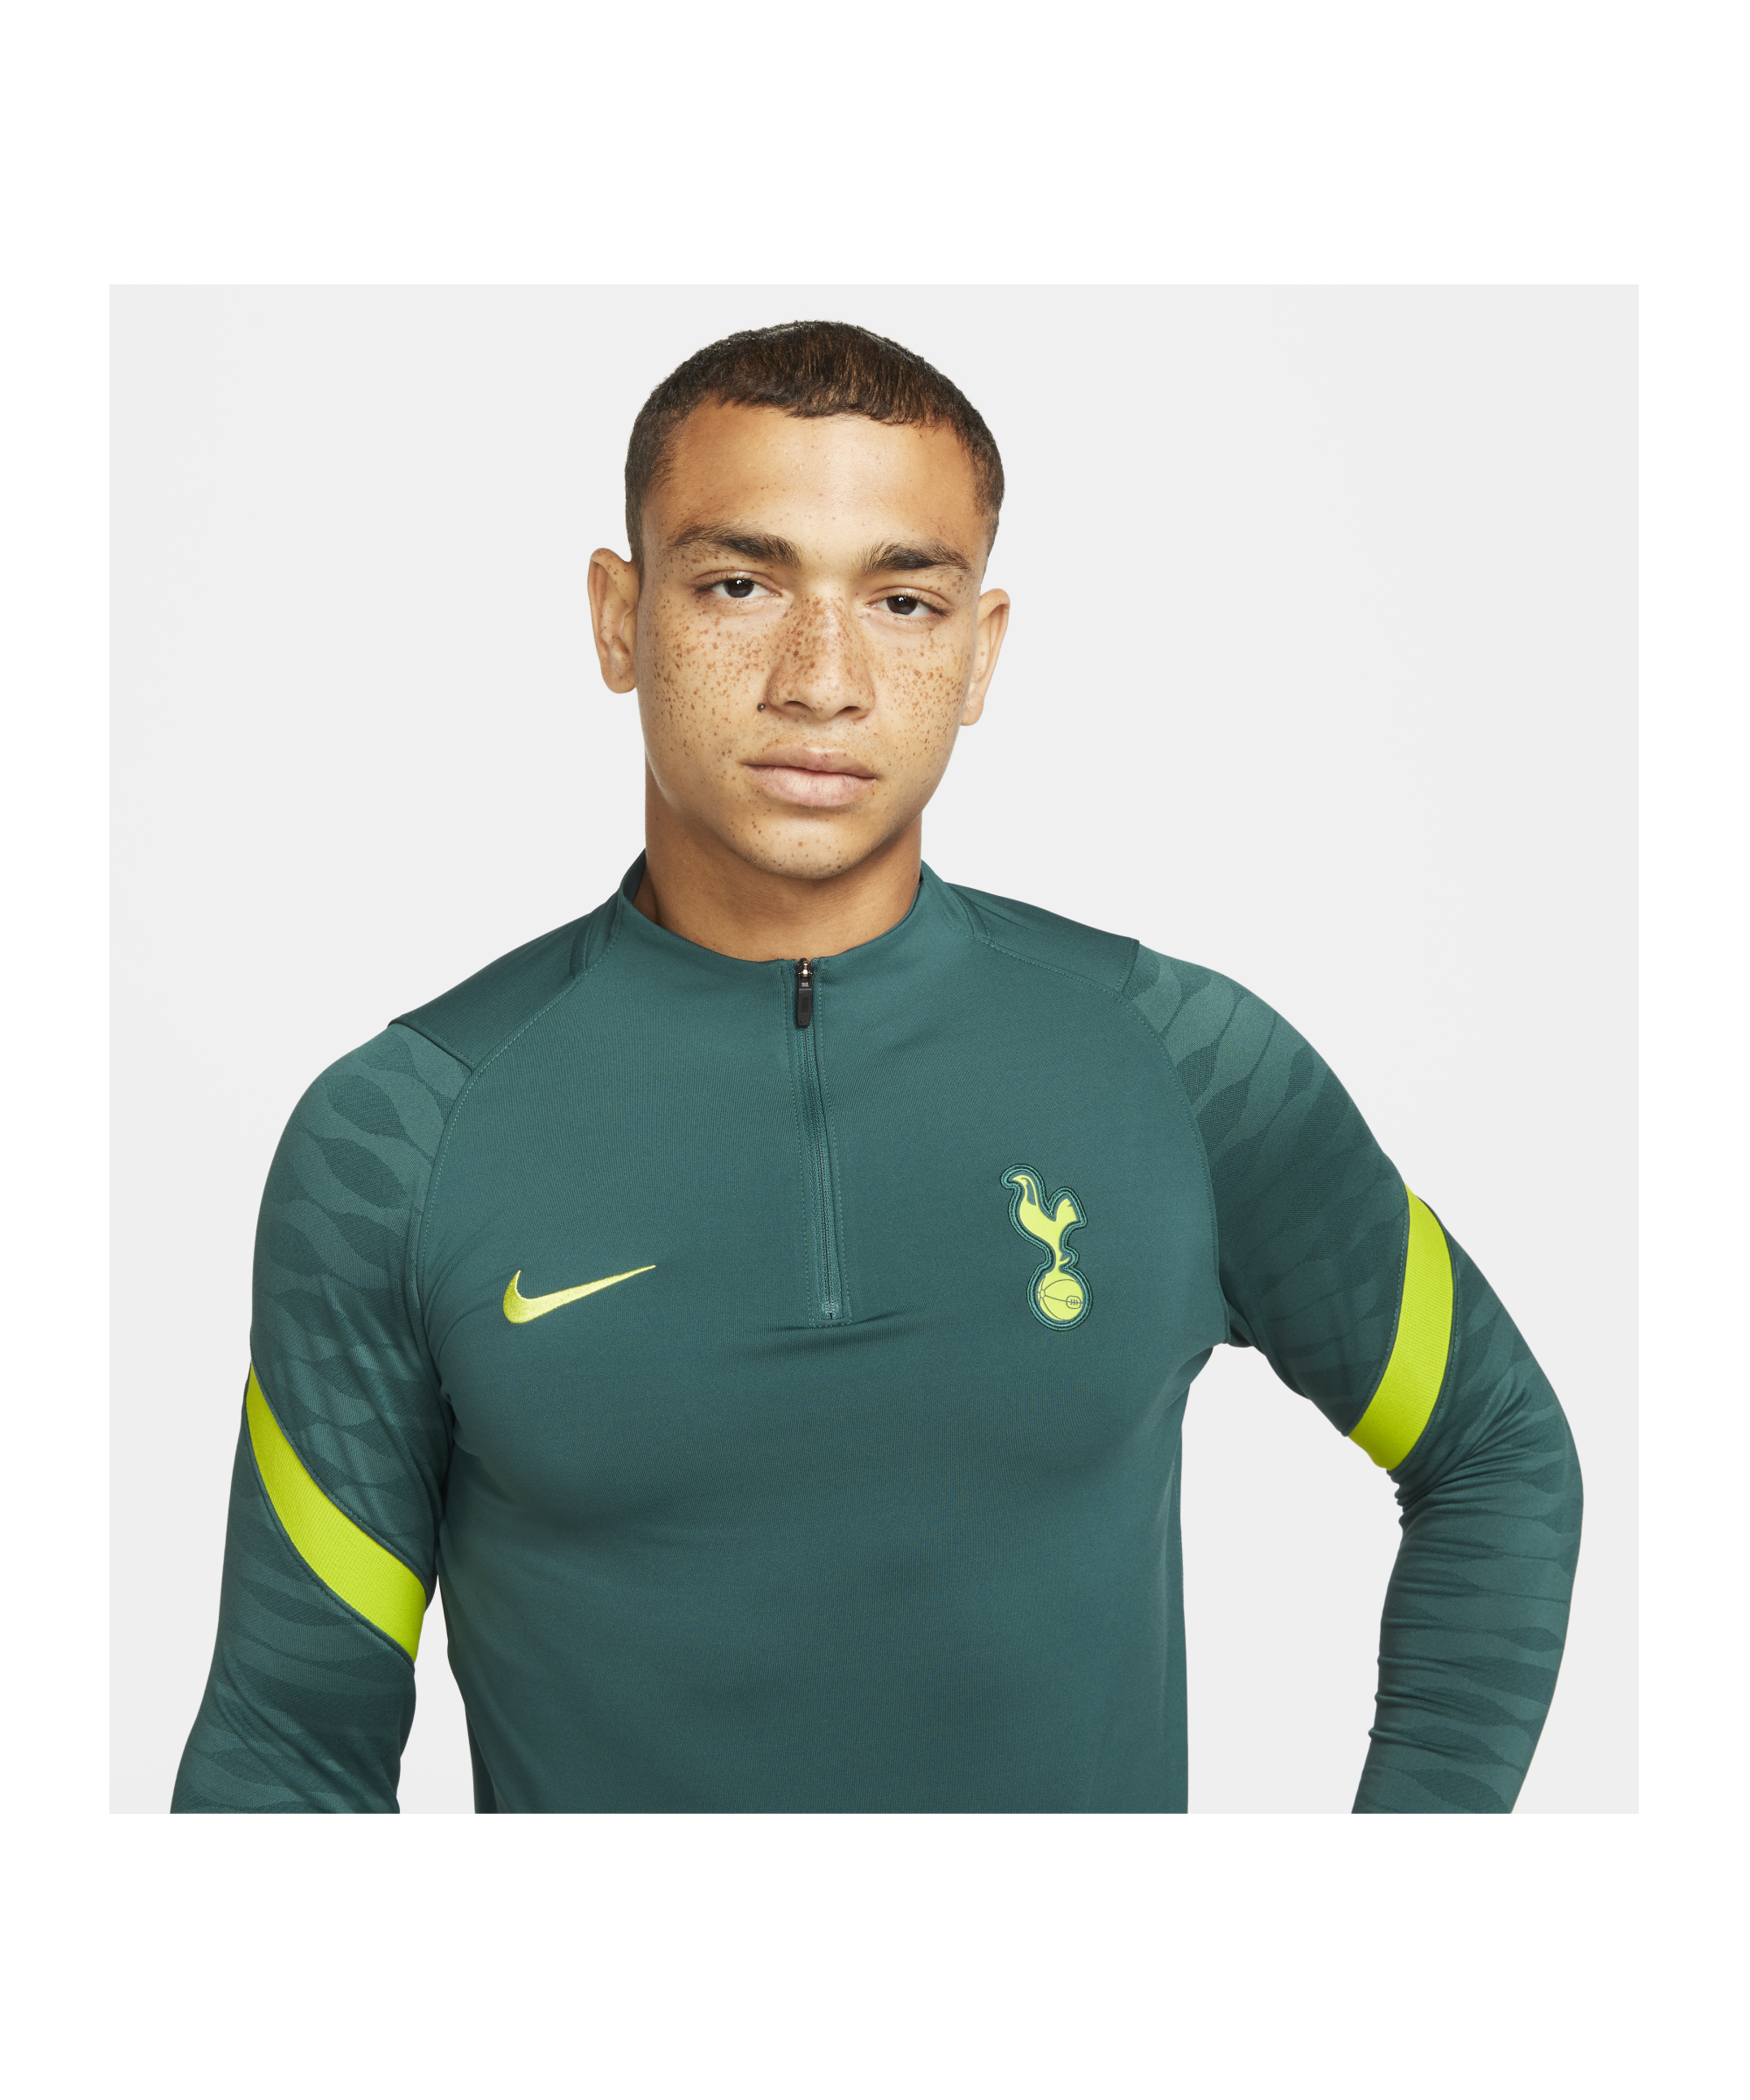 New Tottenham Hotspur Nike training tops revealed 